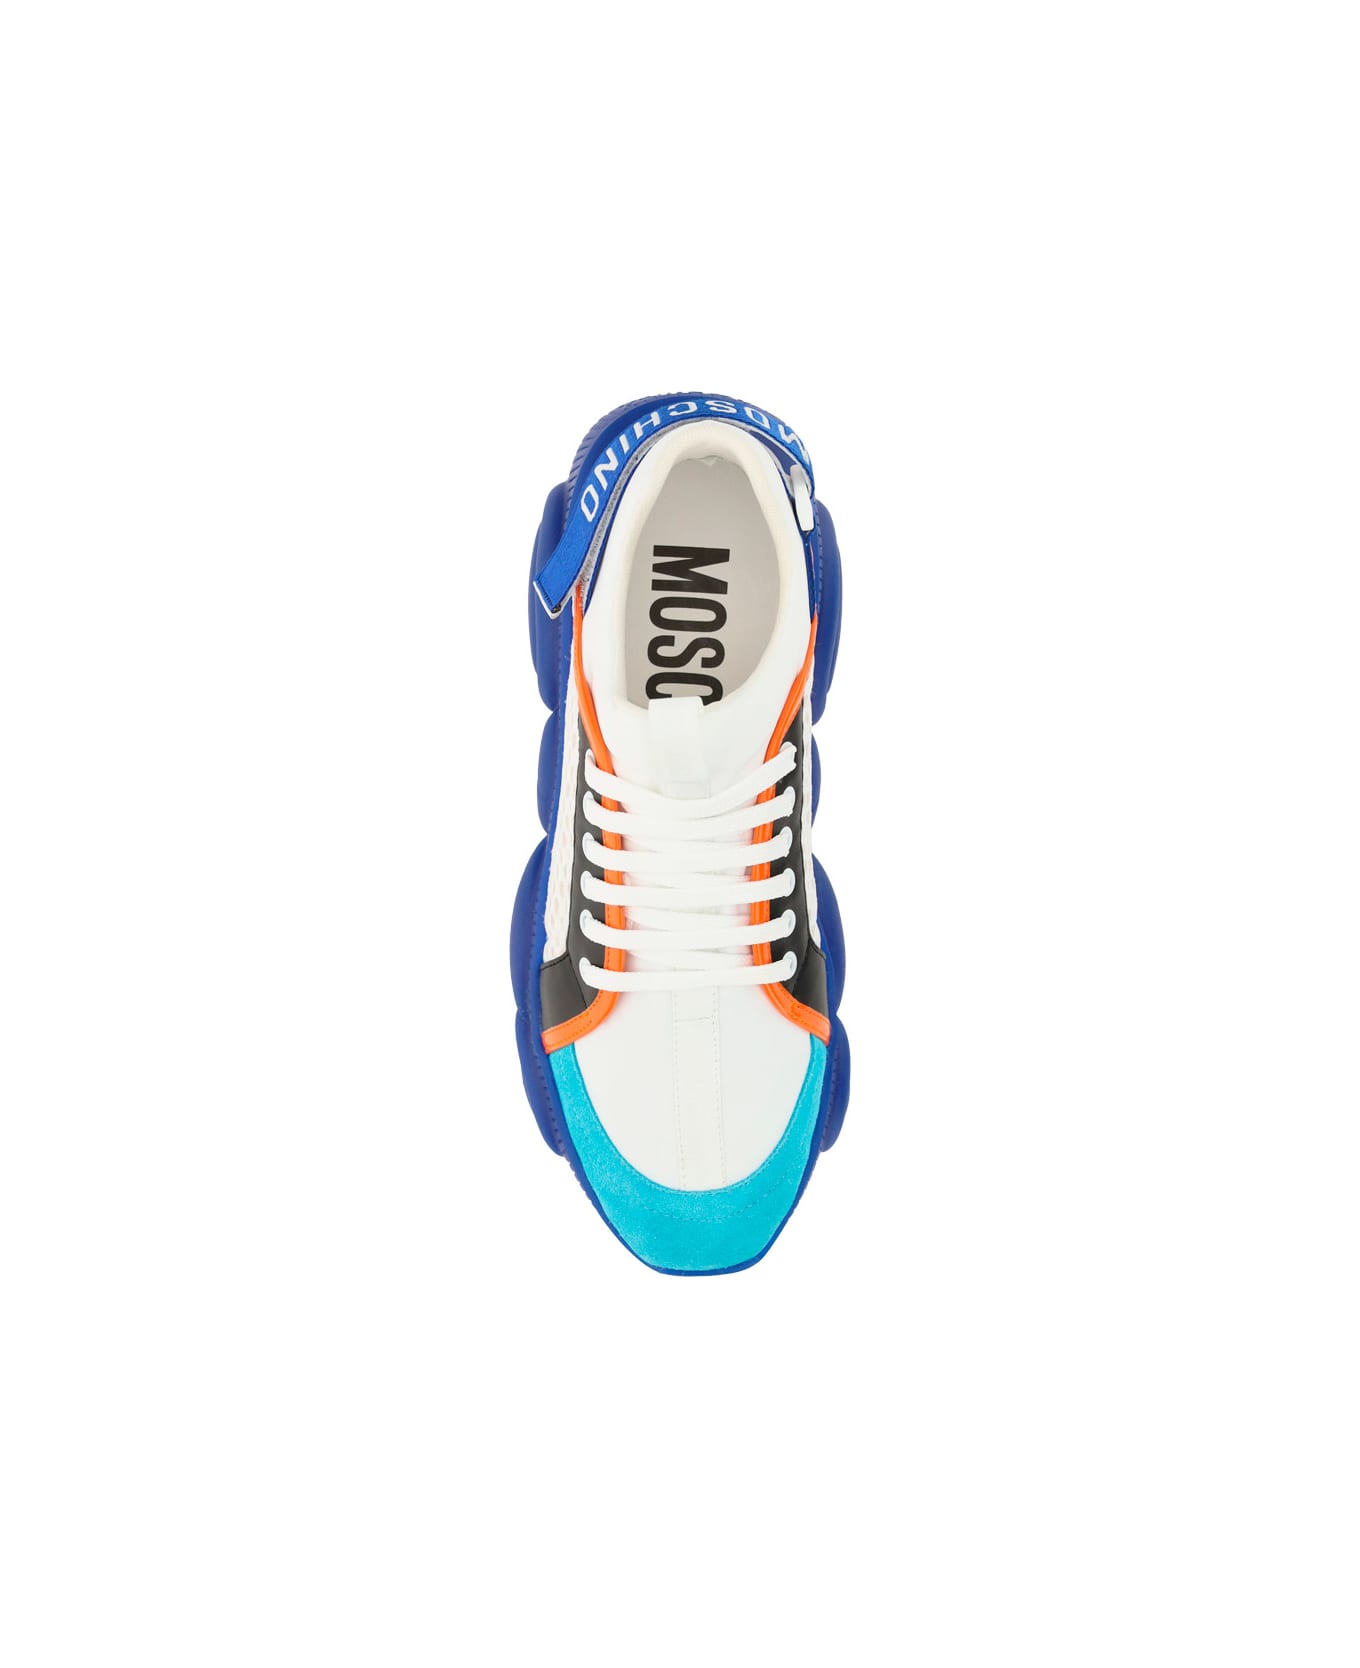 Moschino Sneakers - Multi